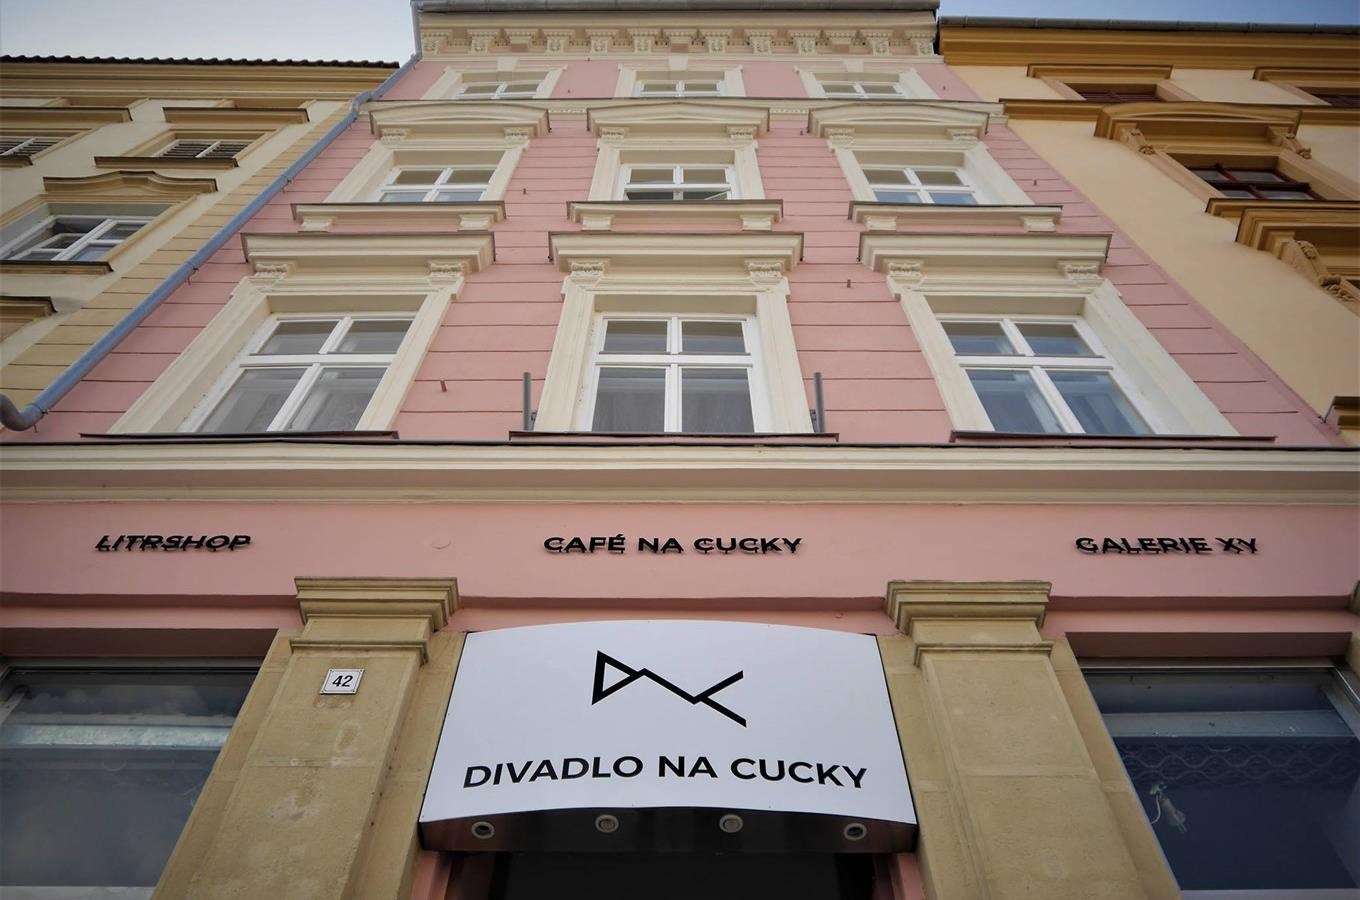 Divadlo na cucky v Olomouci s galerií a kavárnou